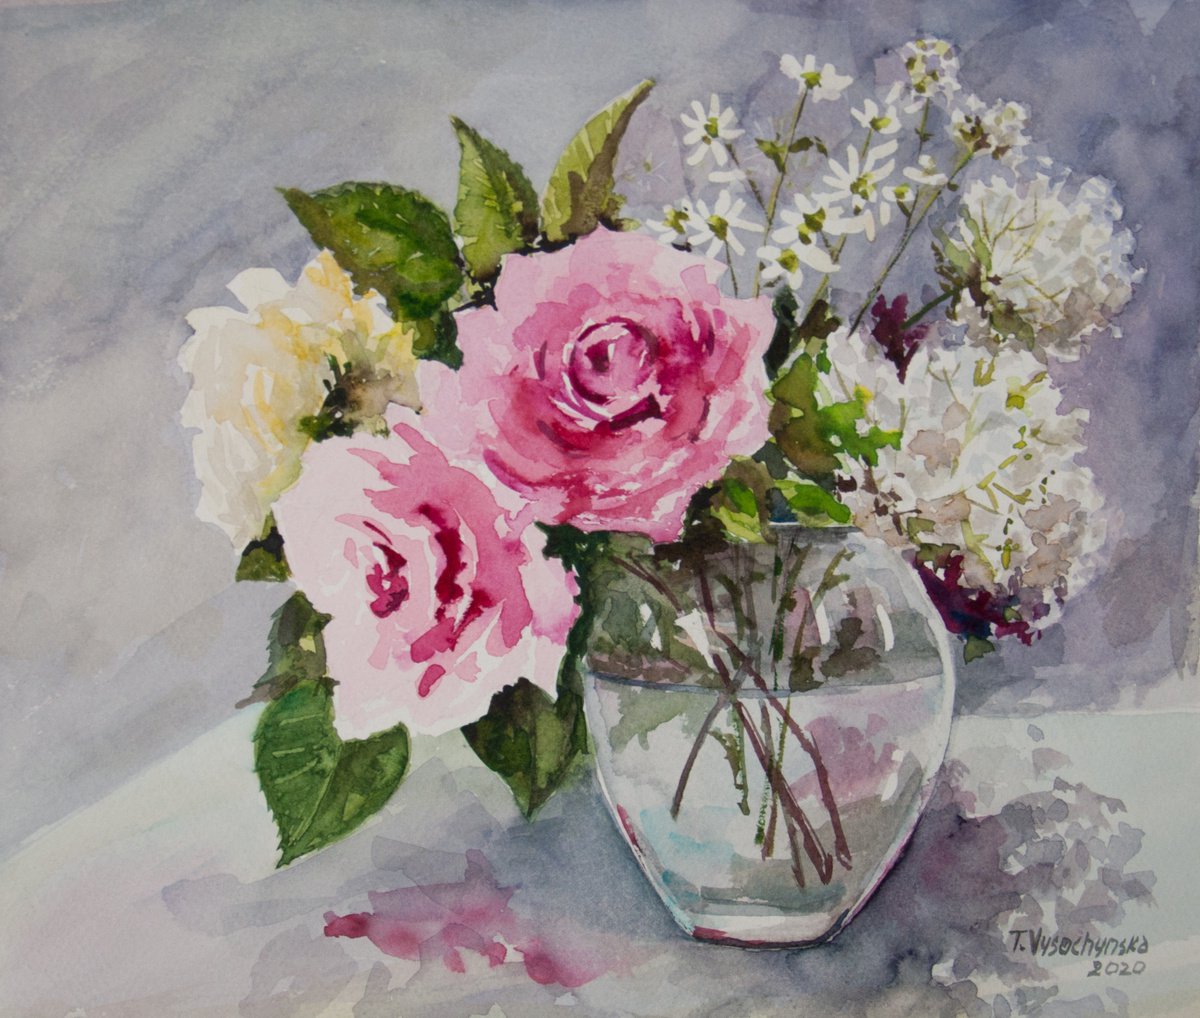 Roses in glass vase. Flower still life. by Tetiana Vysochynska